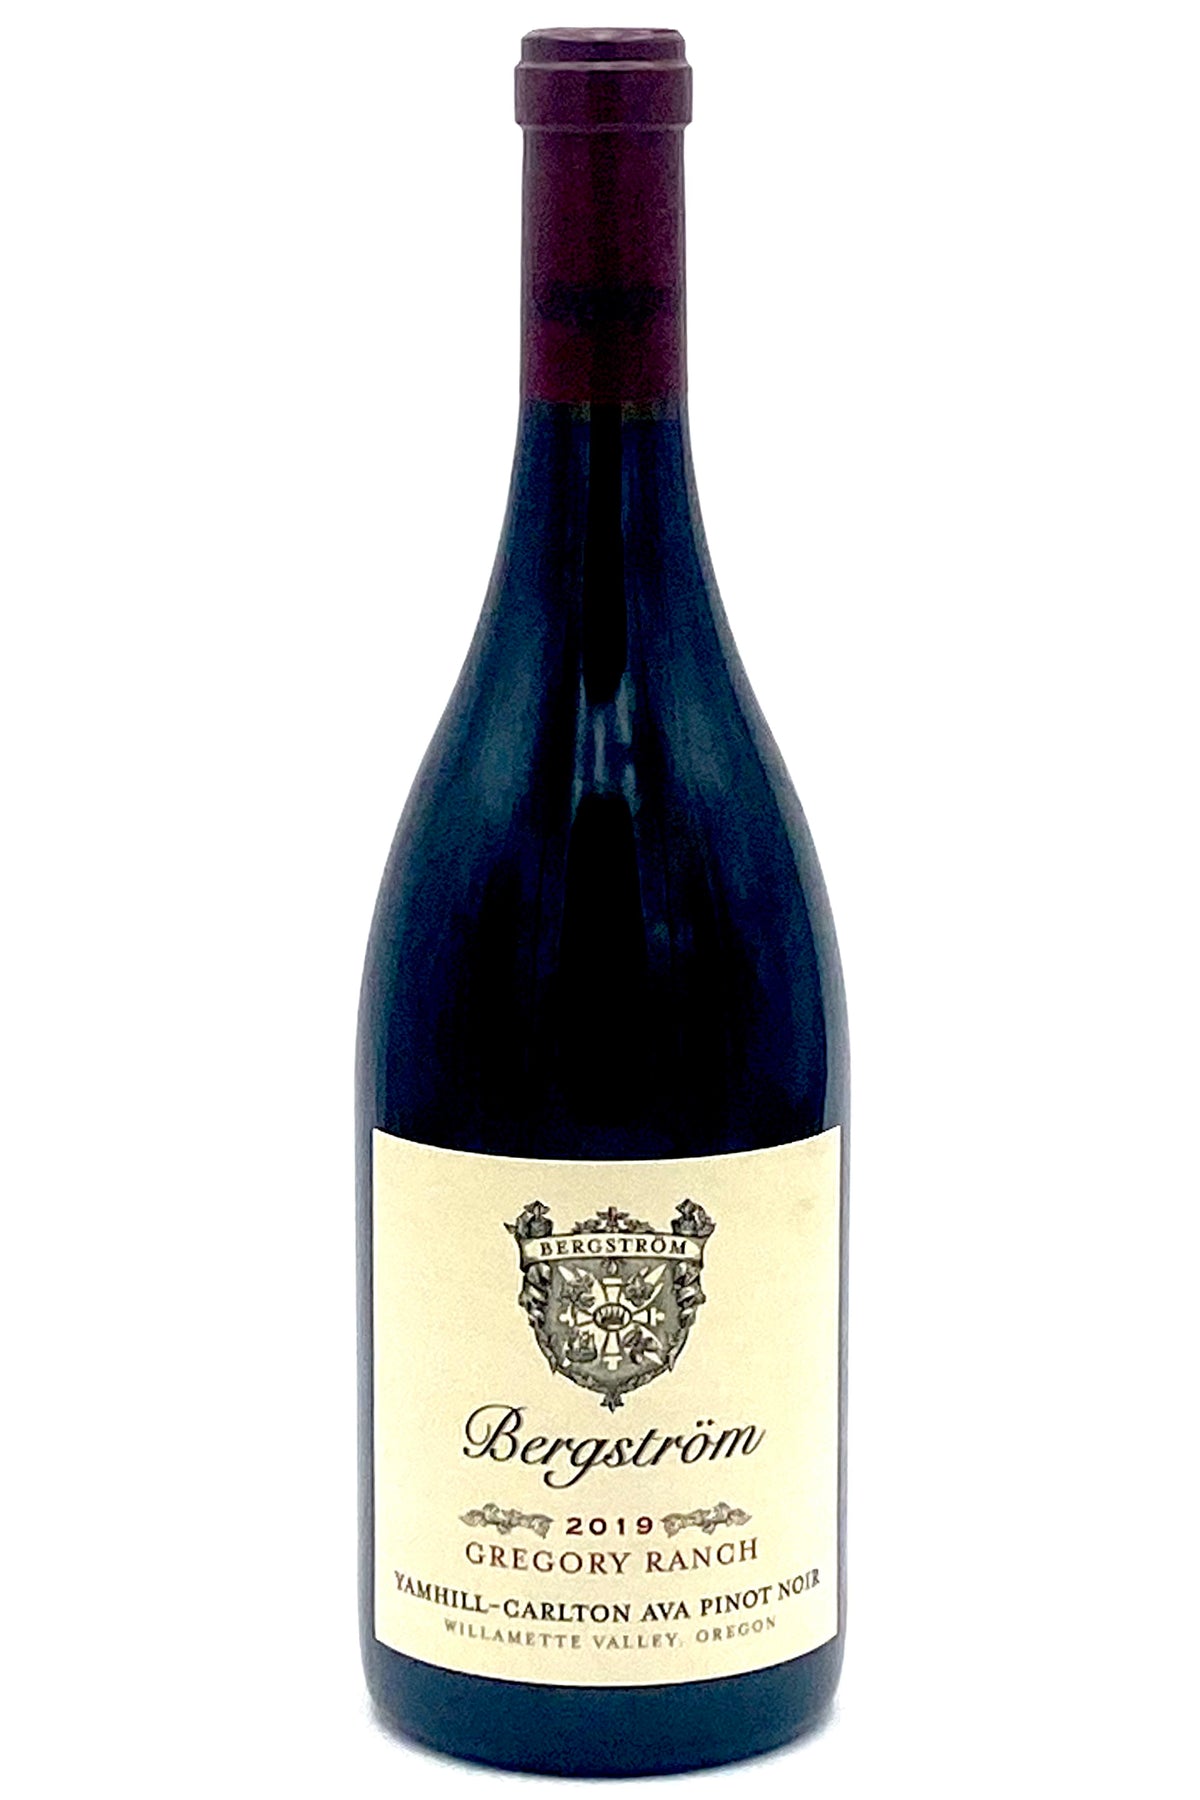 Bergstrom 2019 Pinot Noir Gregory Ranch Yamhill-Carlton